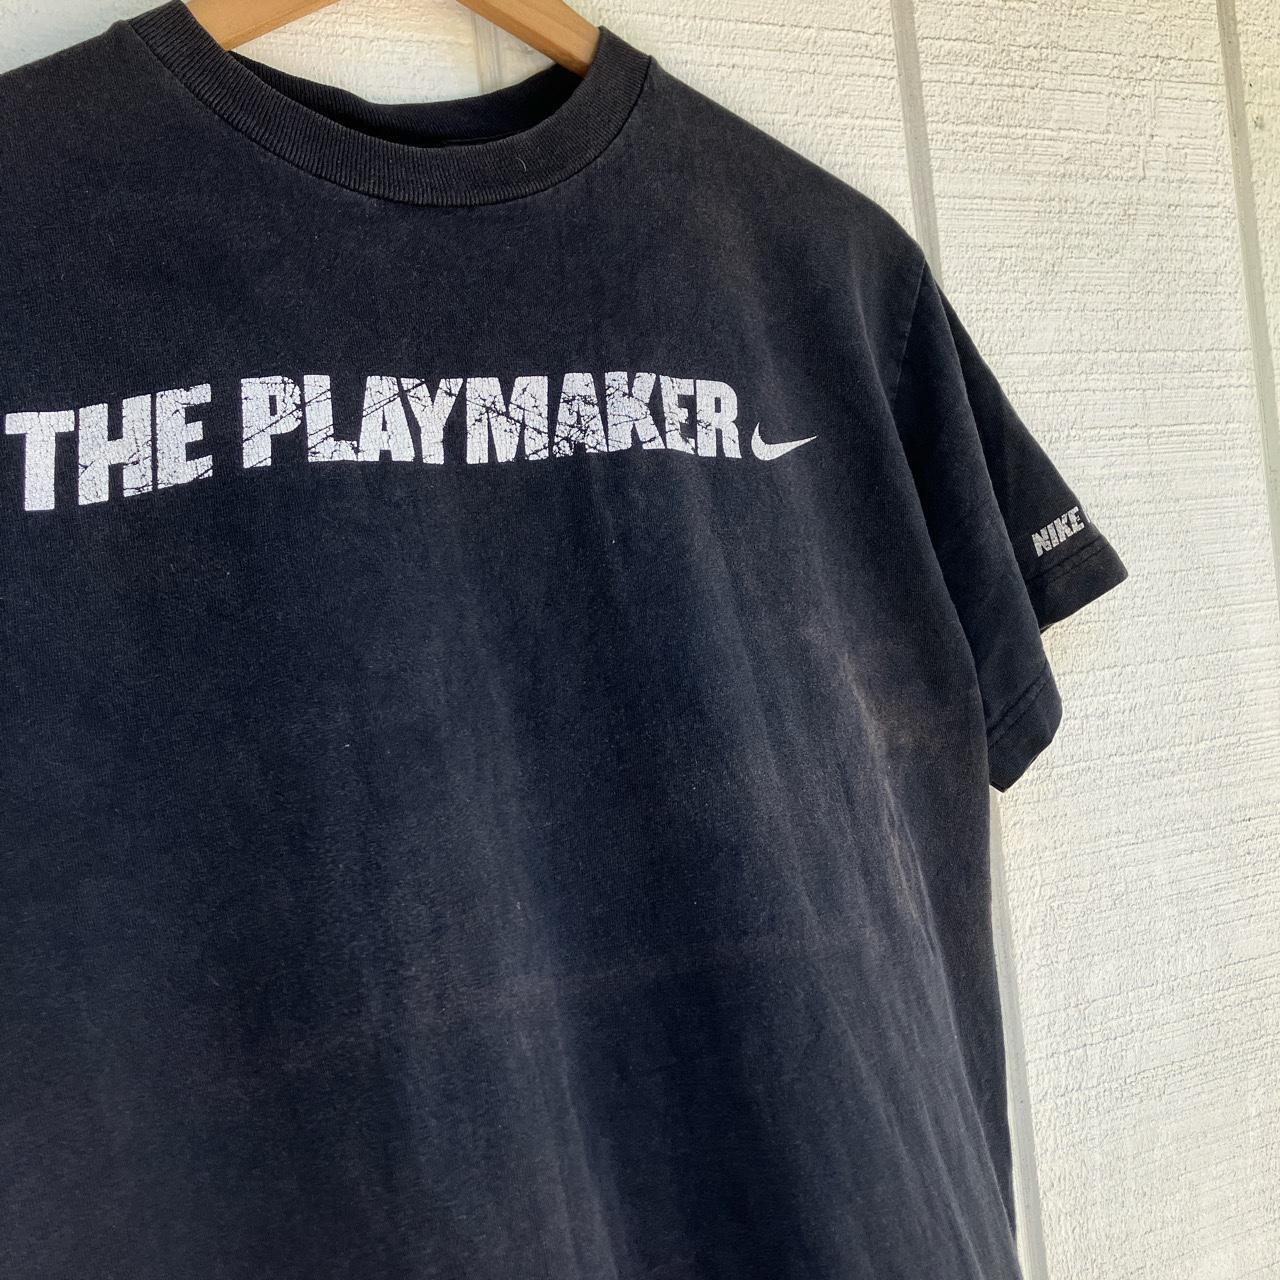 Y2K Nike The Playmaker Shirt🔥, No holes, minor